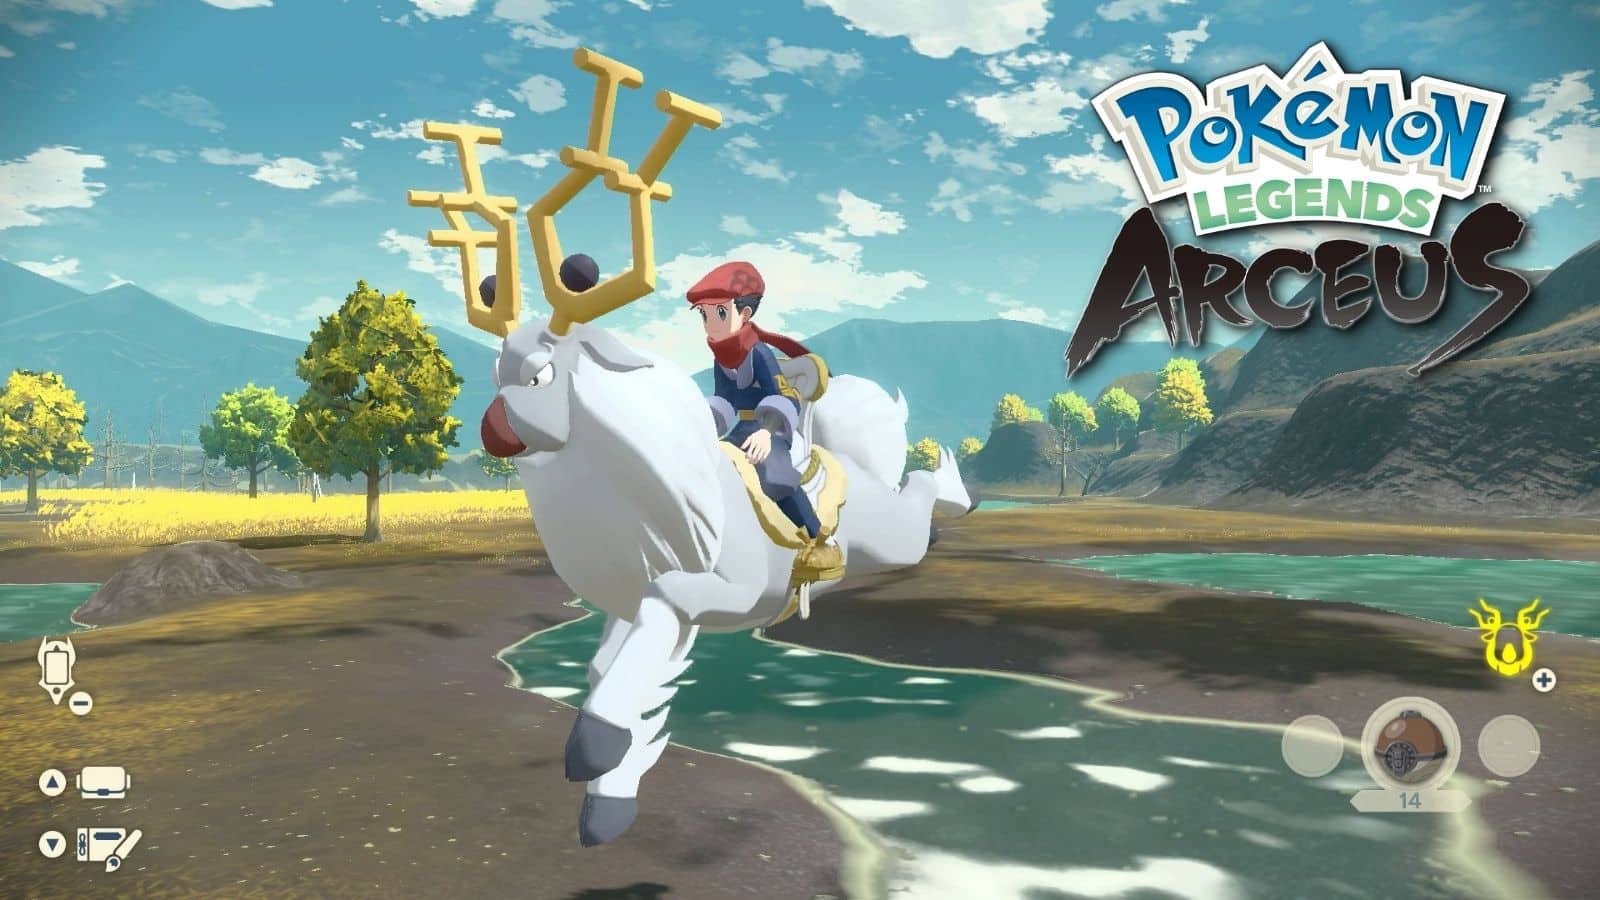 Pokemon Legends Arceus Receives A Metascore Of 86 – NintendoSoup